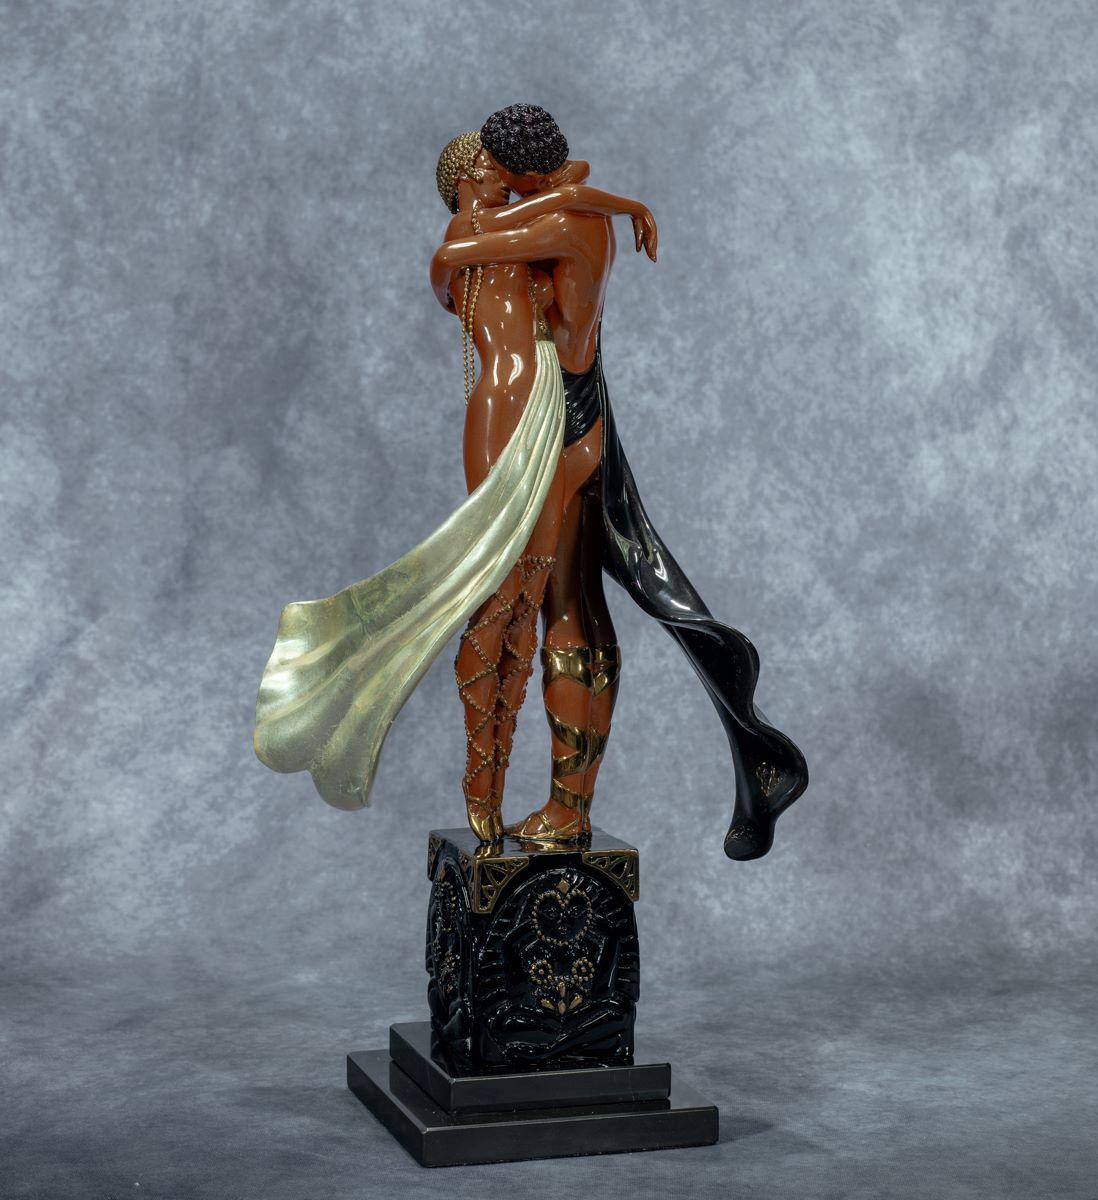 Erté Figurative Sculpture - Lovers and Idol